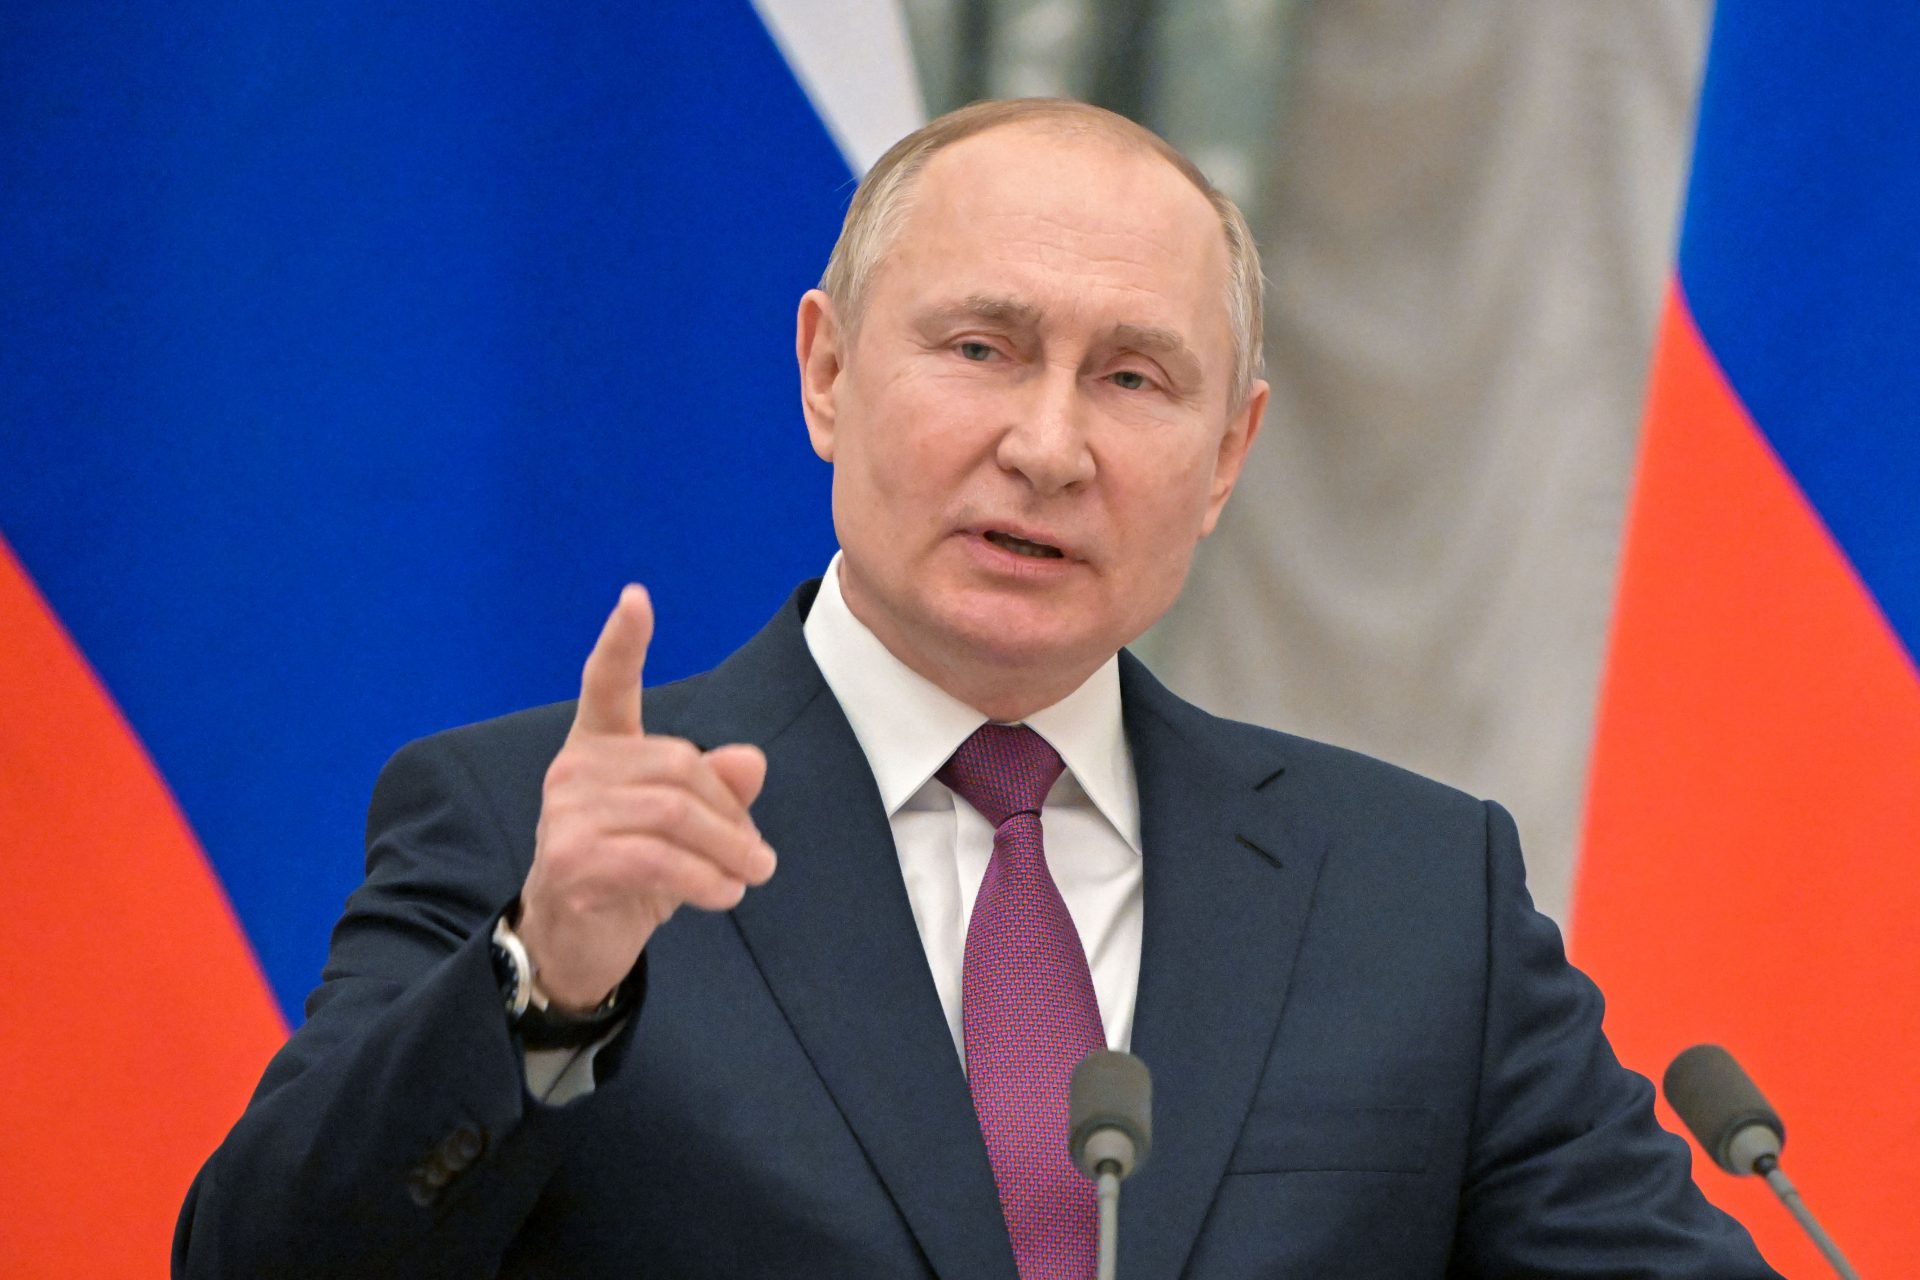 Putin cumpre promessa após ataque em território russo